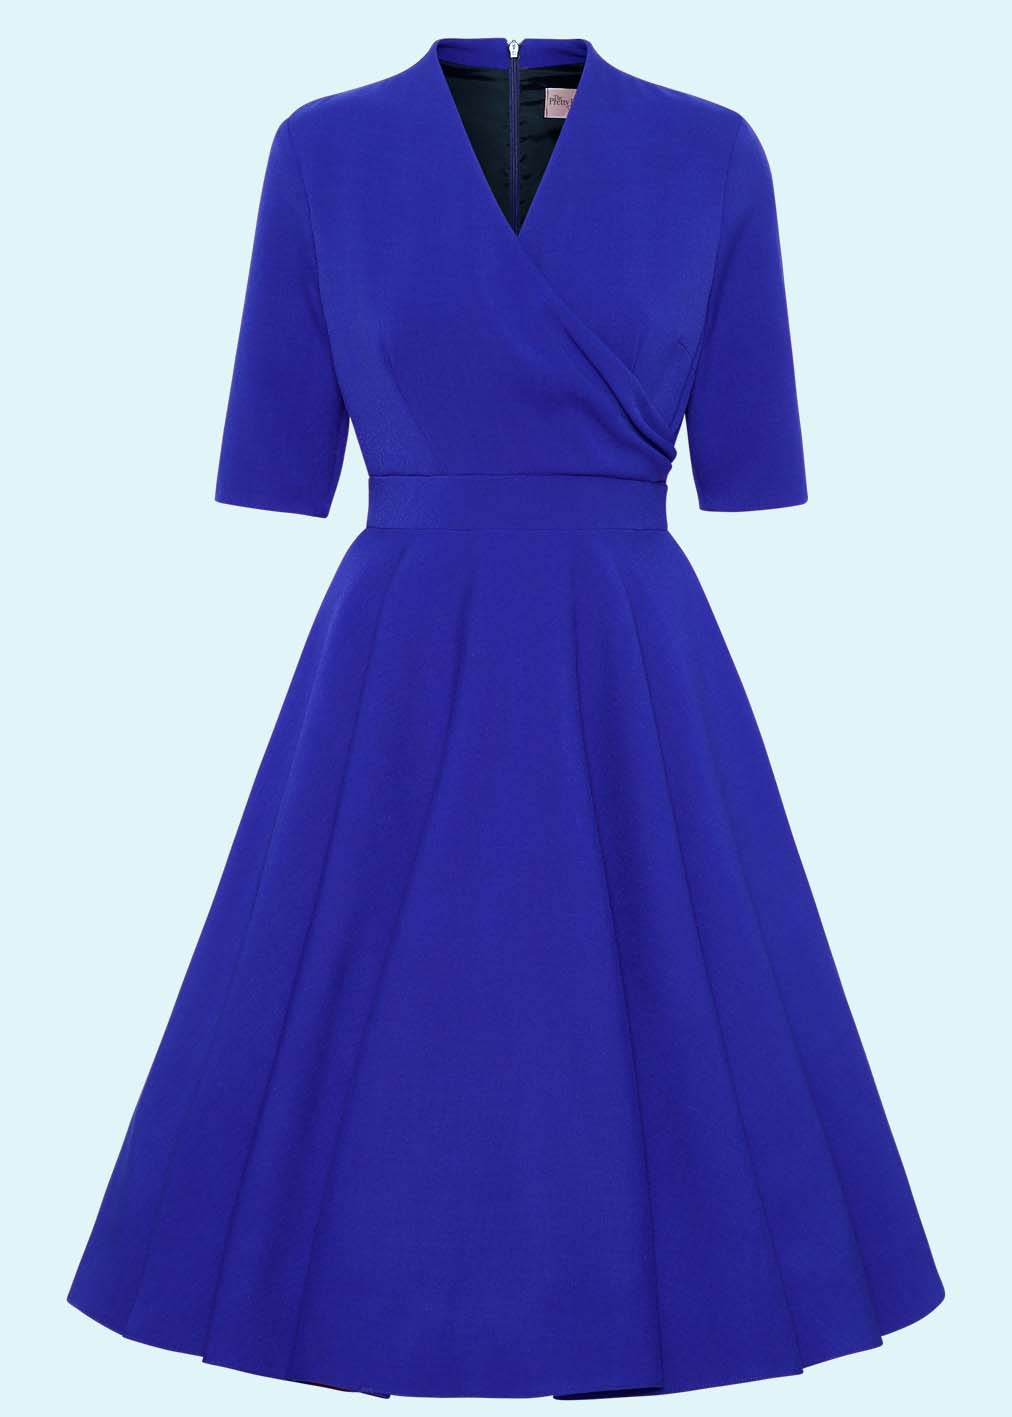 Jeg regner med Patent markedsføring Swing dress in cobalt blue from Pretty Dress Company✓